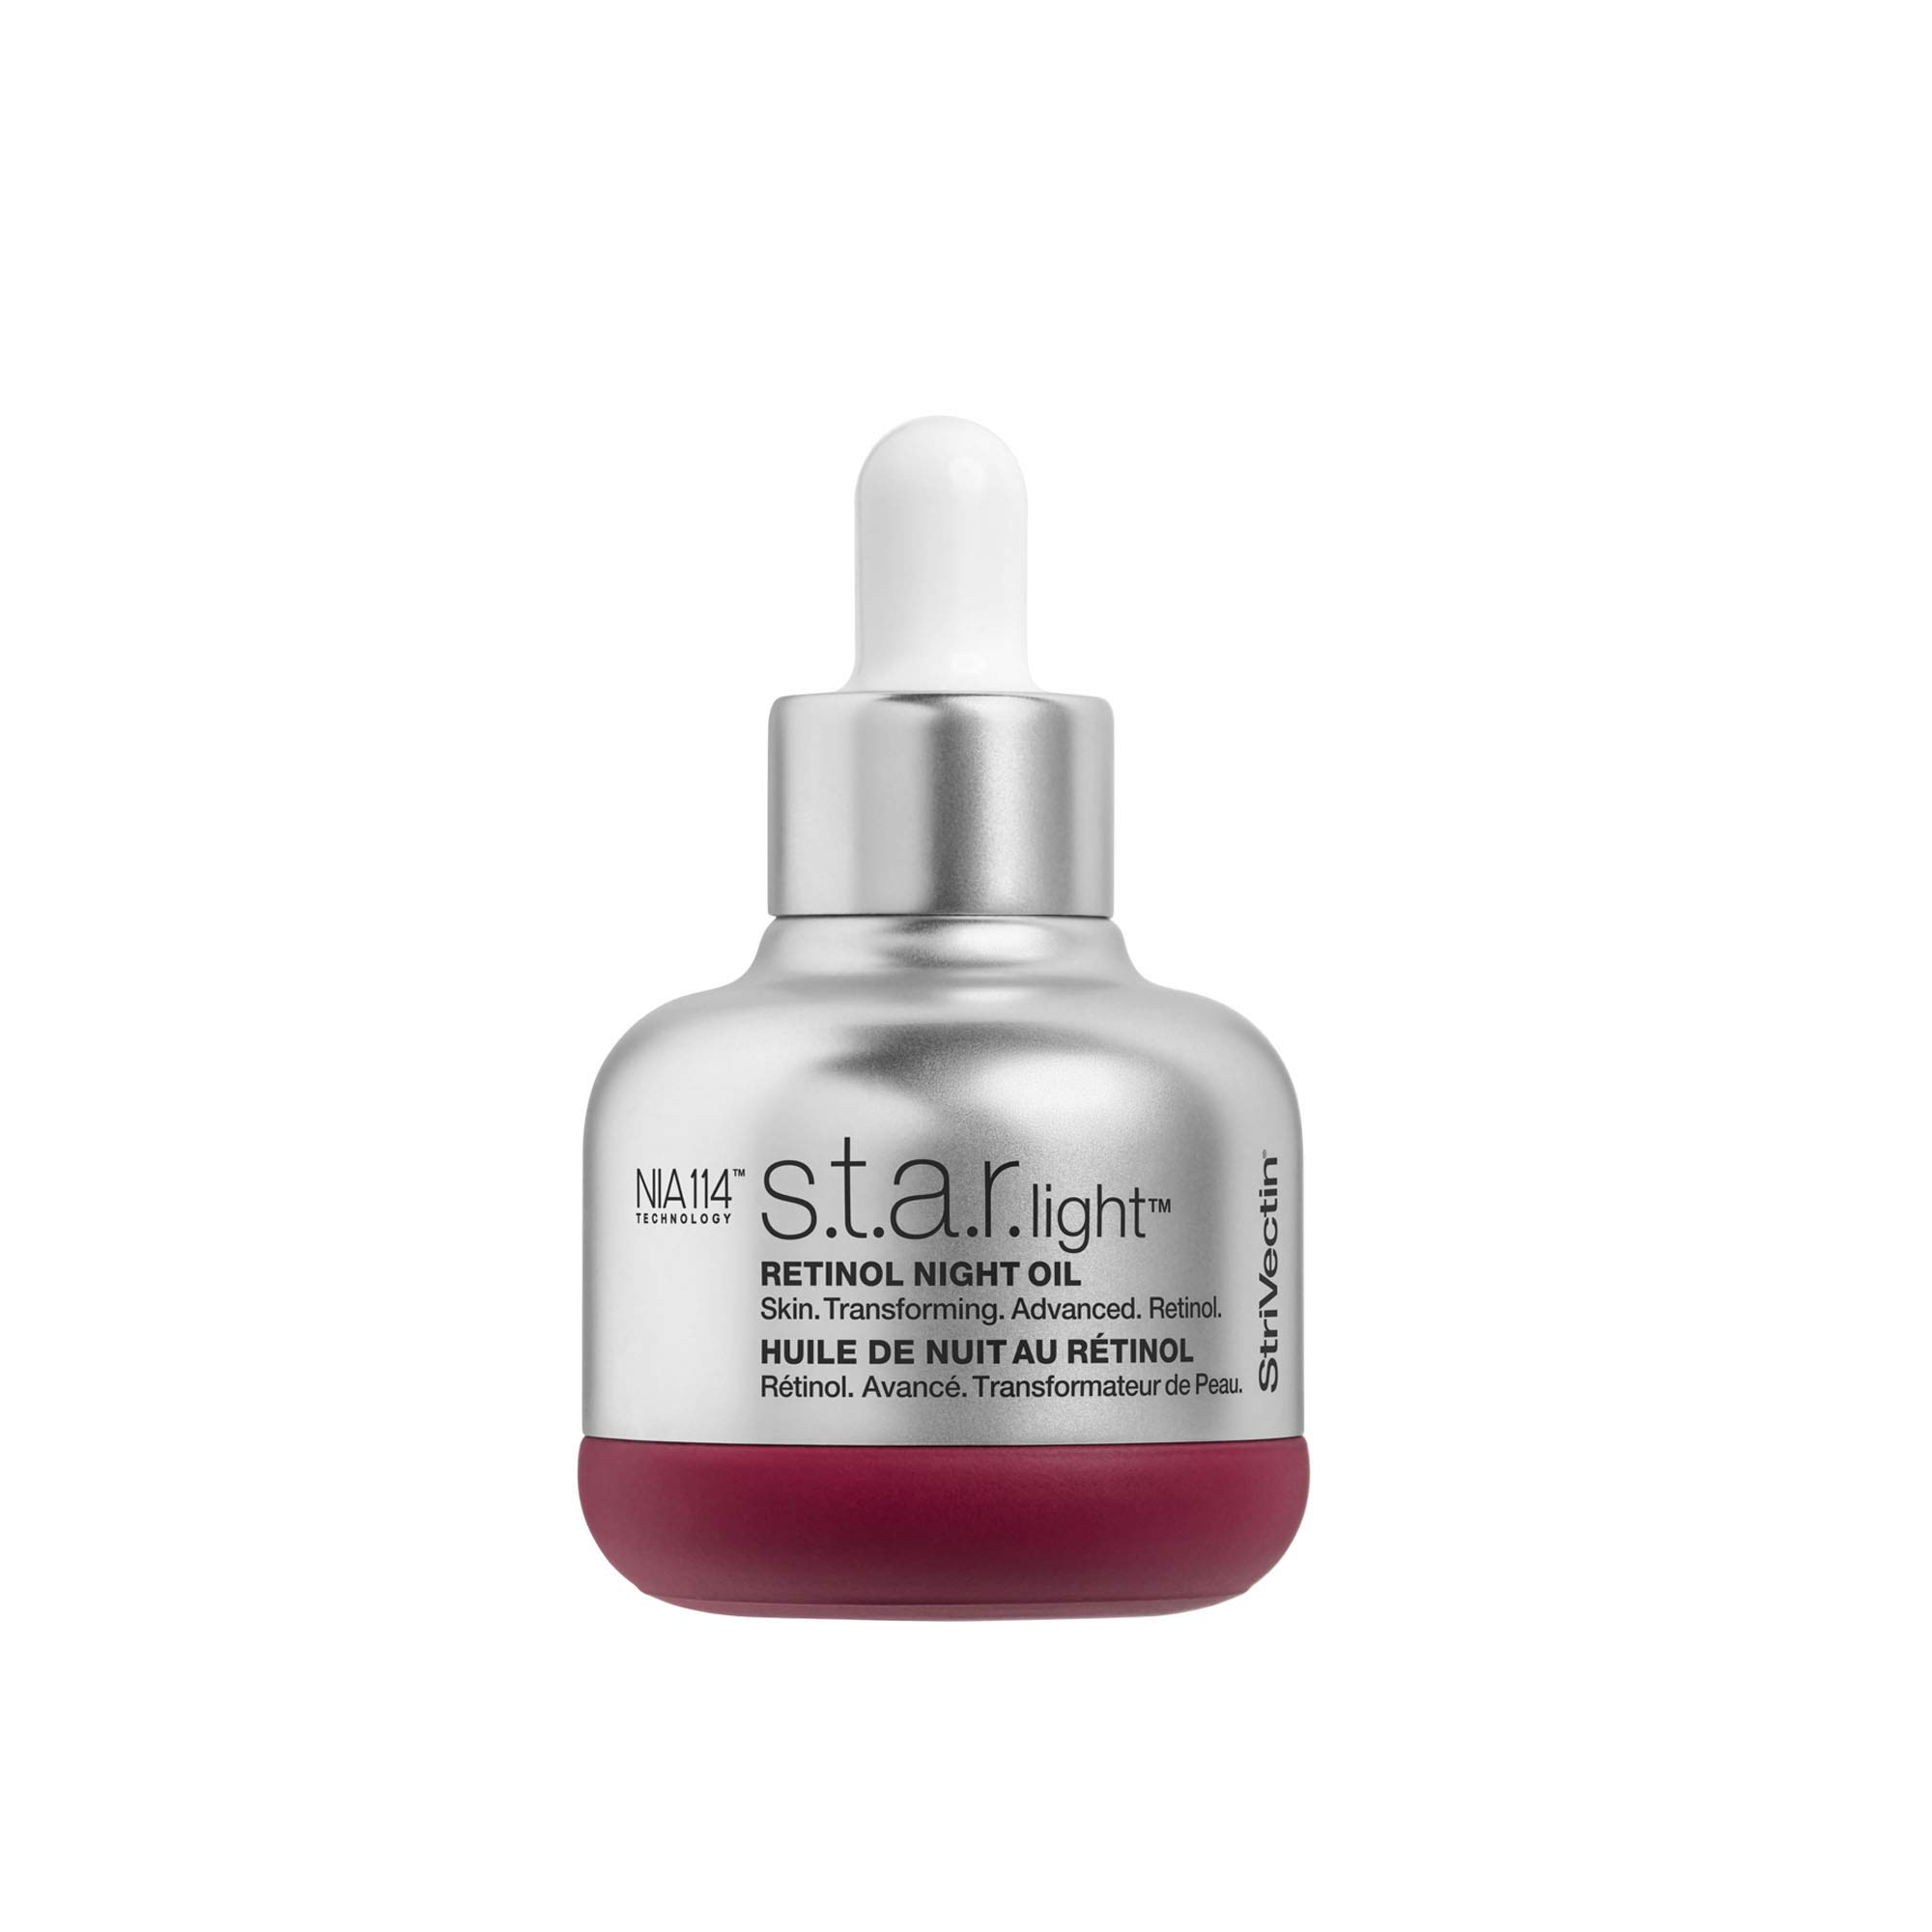 StriVectin Advanced Retinol Star Light Night Oil with Squalane, Improves Skin Texture, Wrinkles, Firmness and Dehydration, 1 Fl Oz